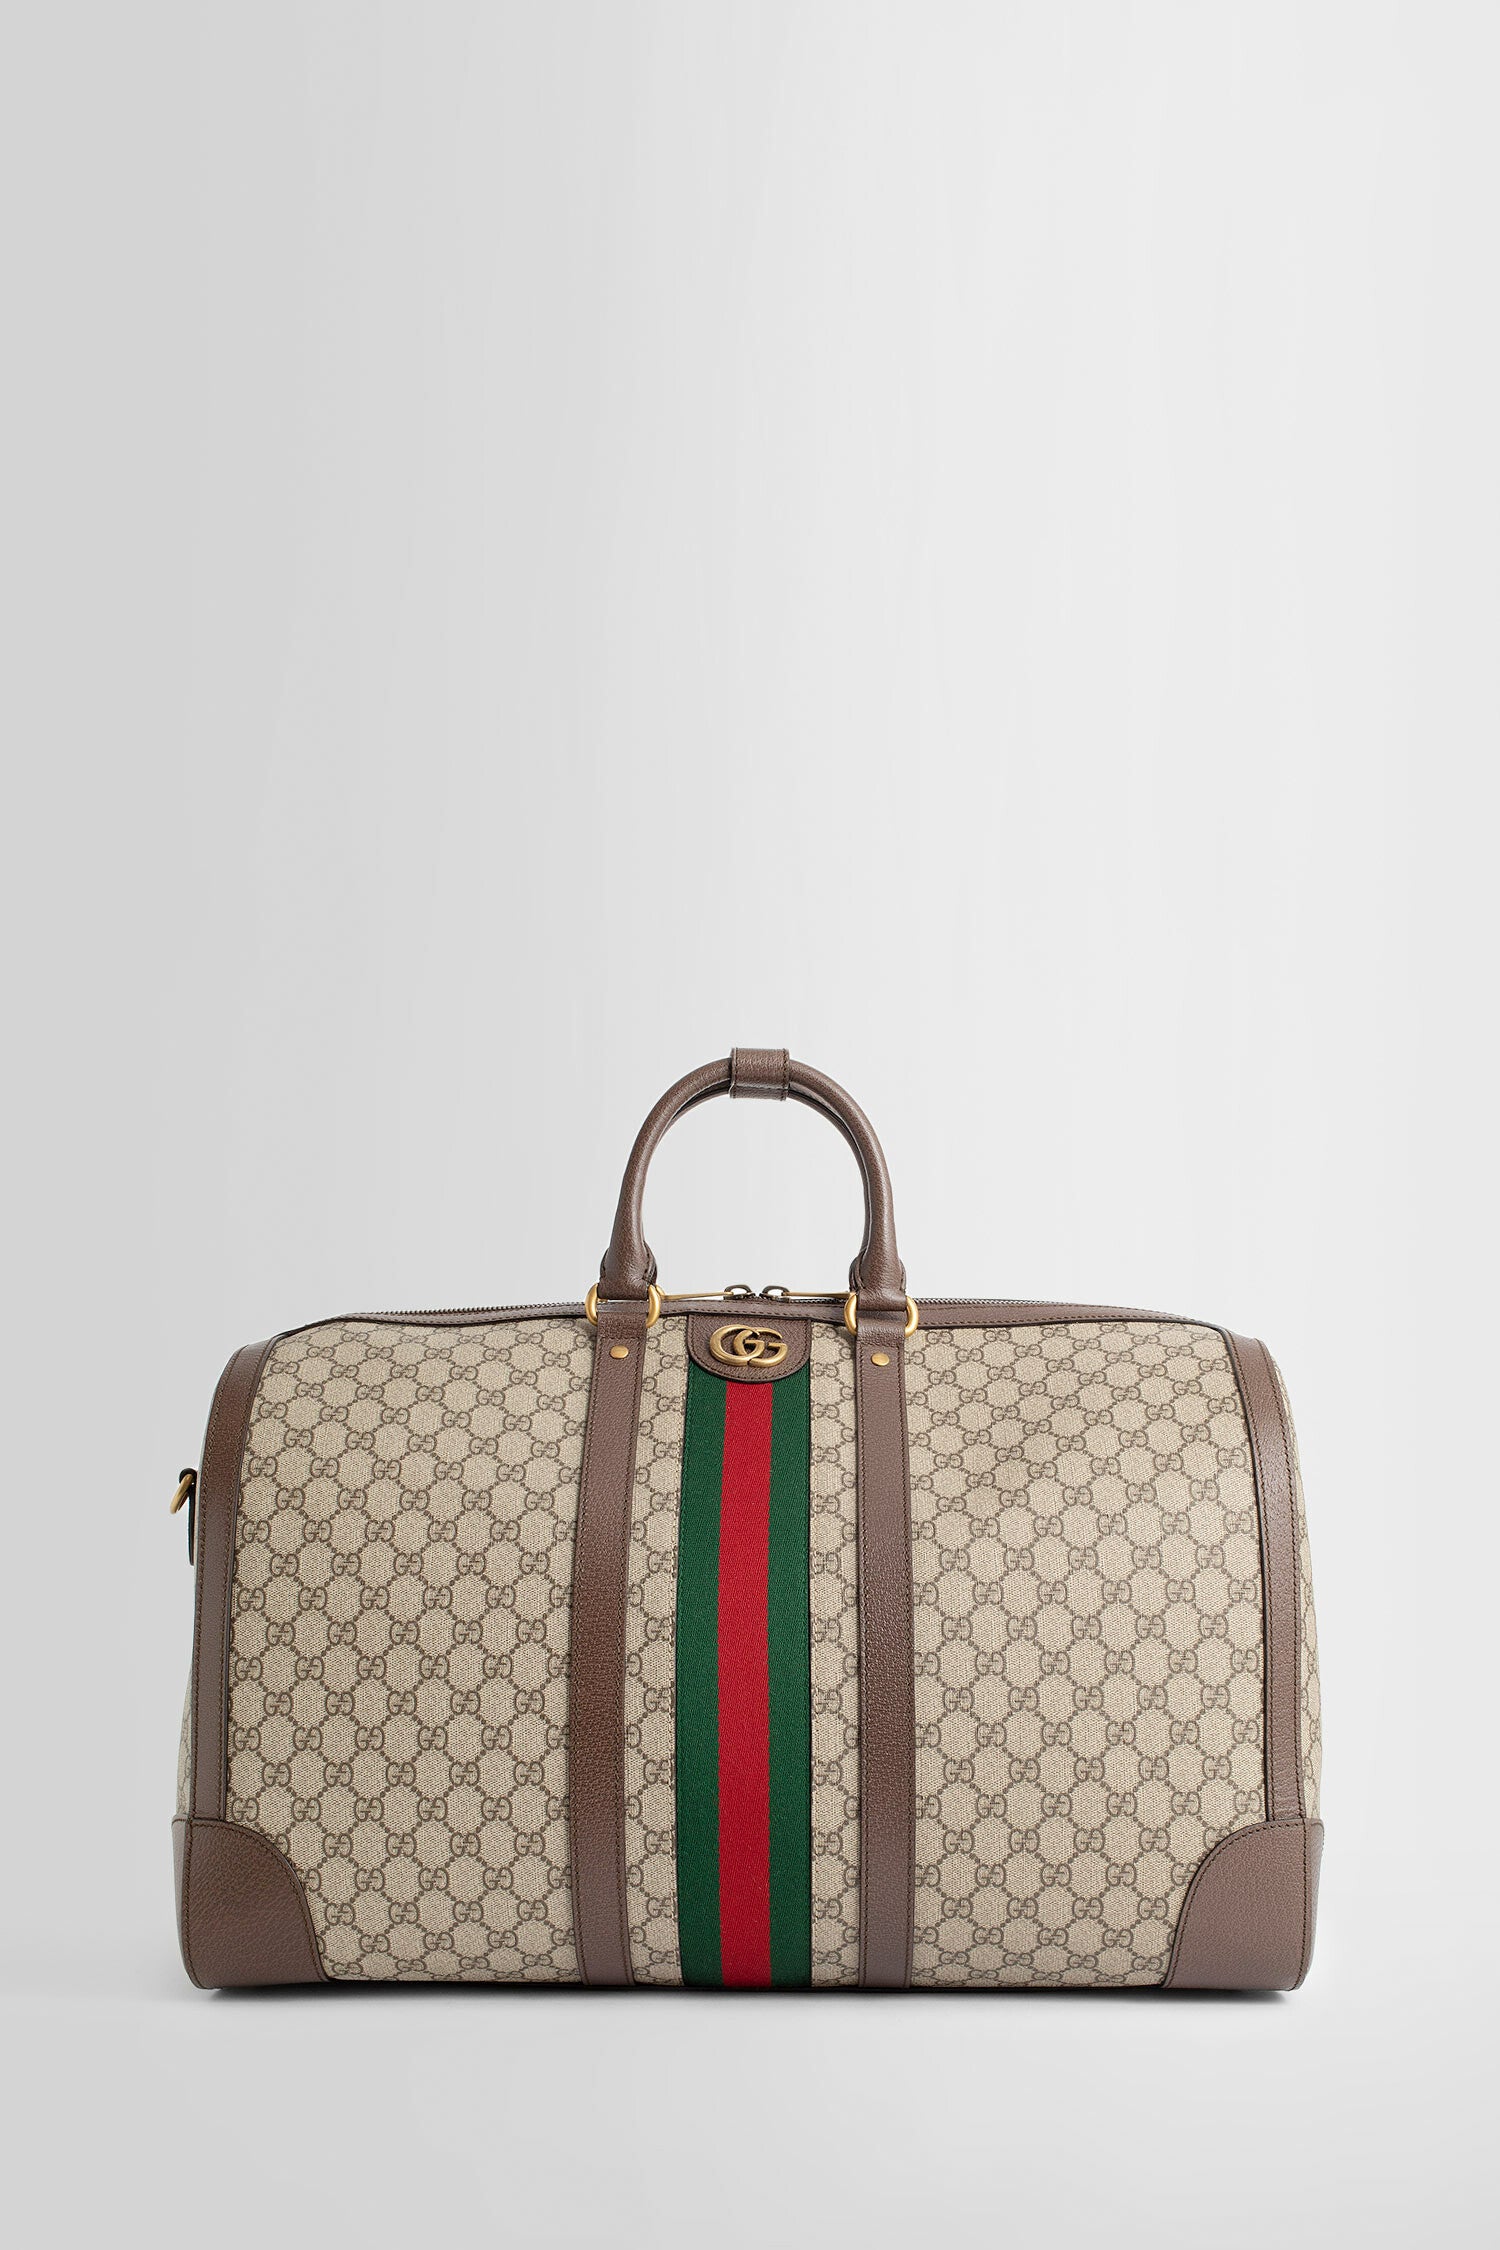 Gucci Man Multicolor Travel Bags | ModeSens